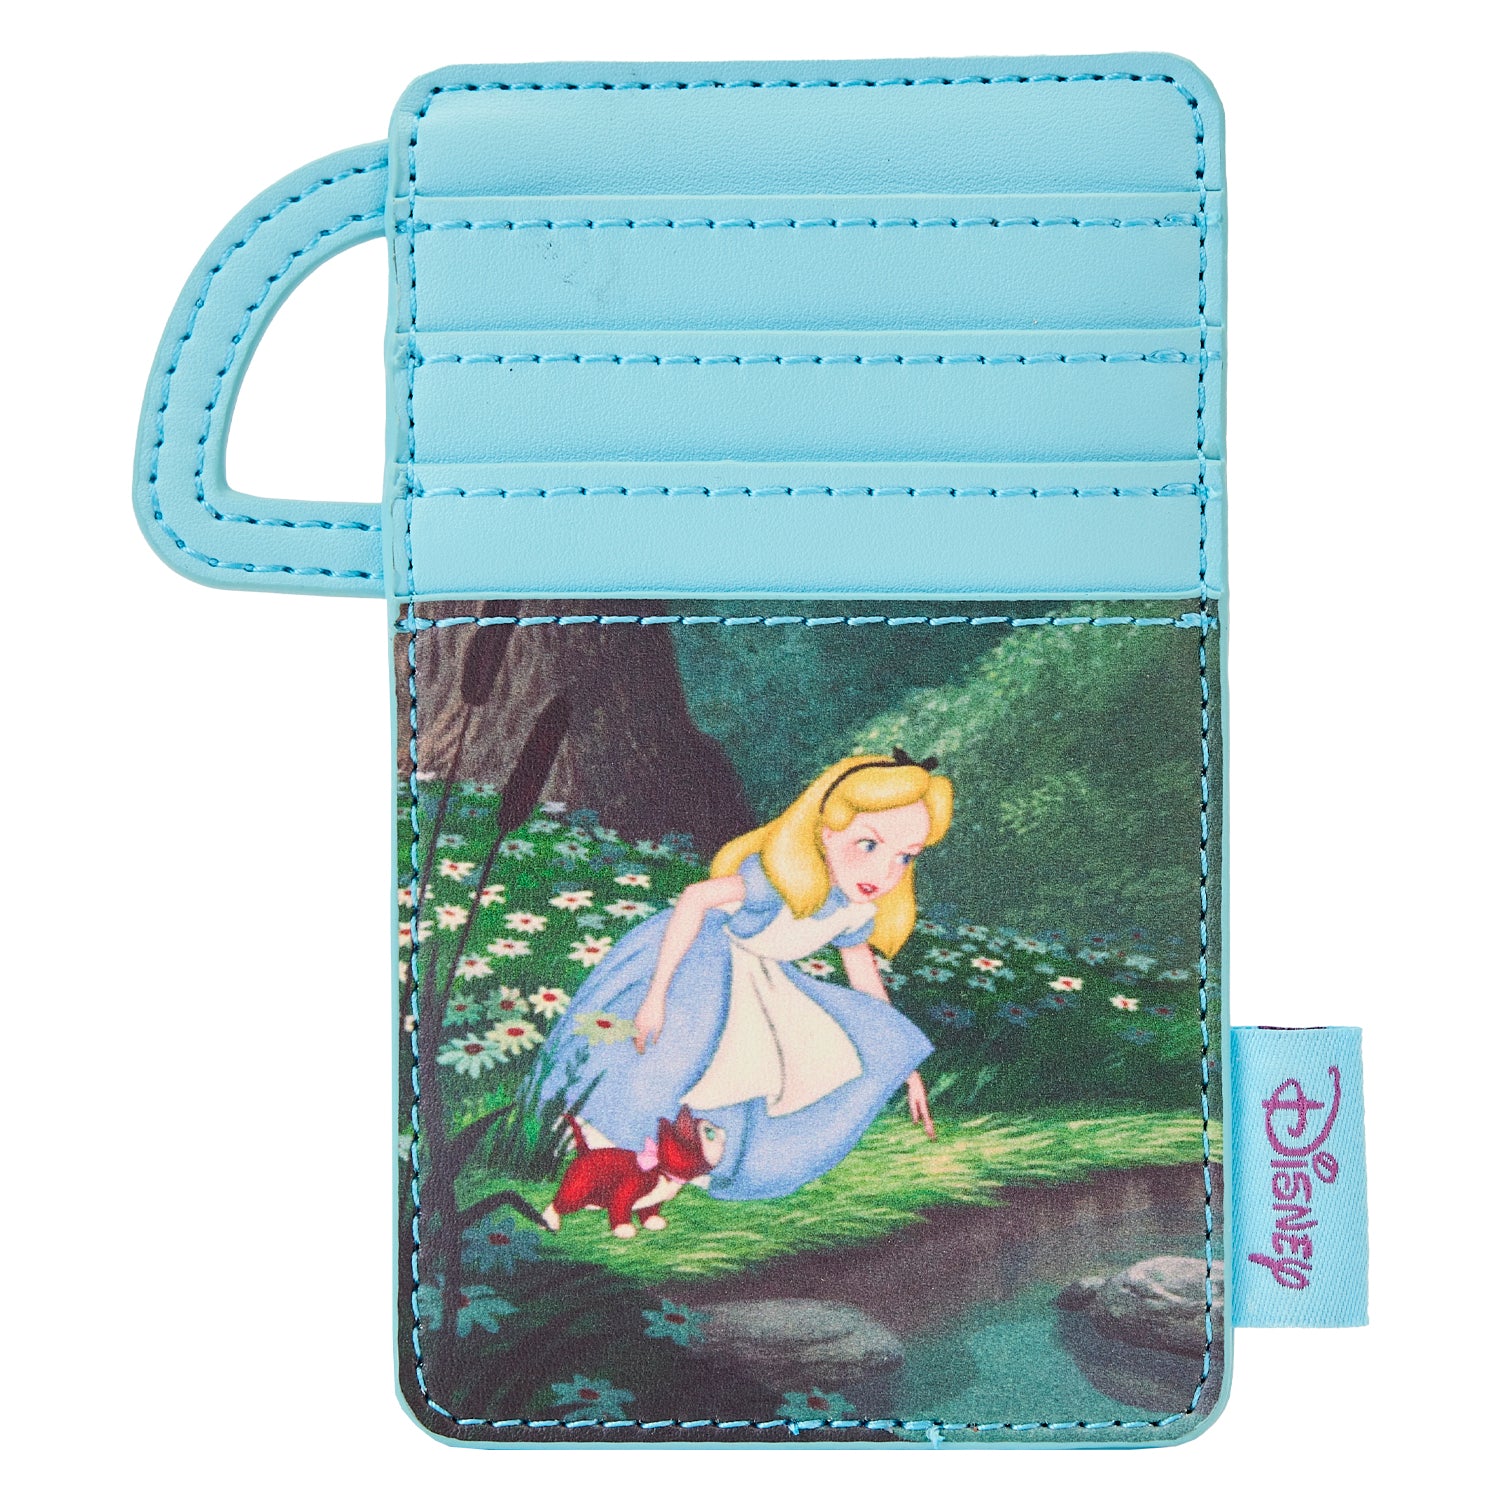 Loungefly Disney Alice in Wonderland Classic Movie Cardholder